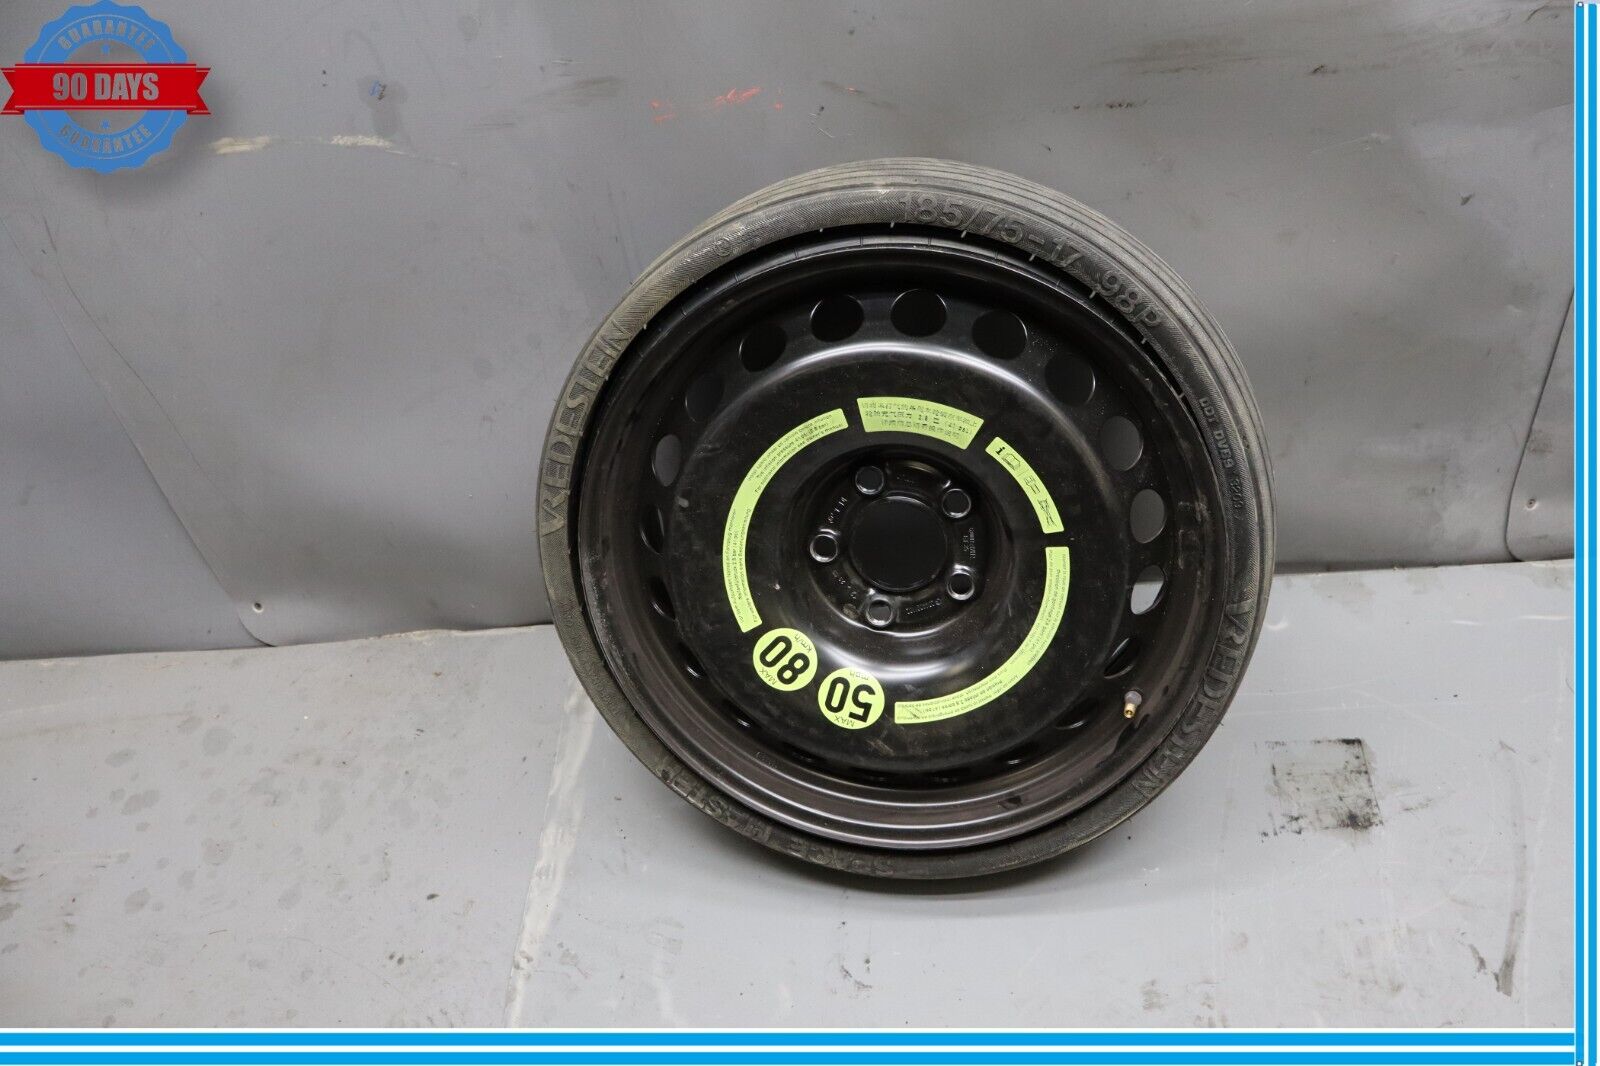 10-15 Mercedes GLK250 GLK350 Emergency Spare Tire Compact Wheel Rim 185/75 Oem